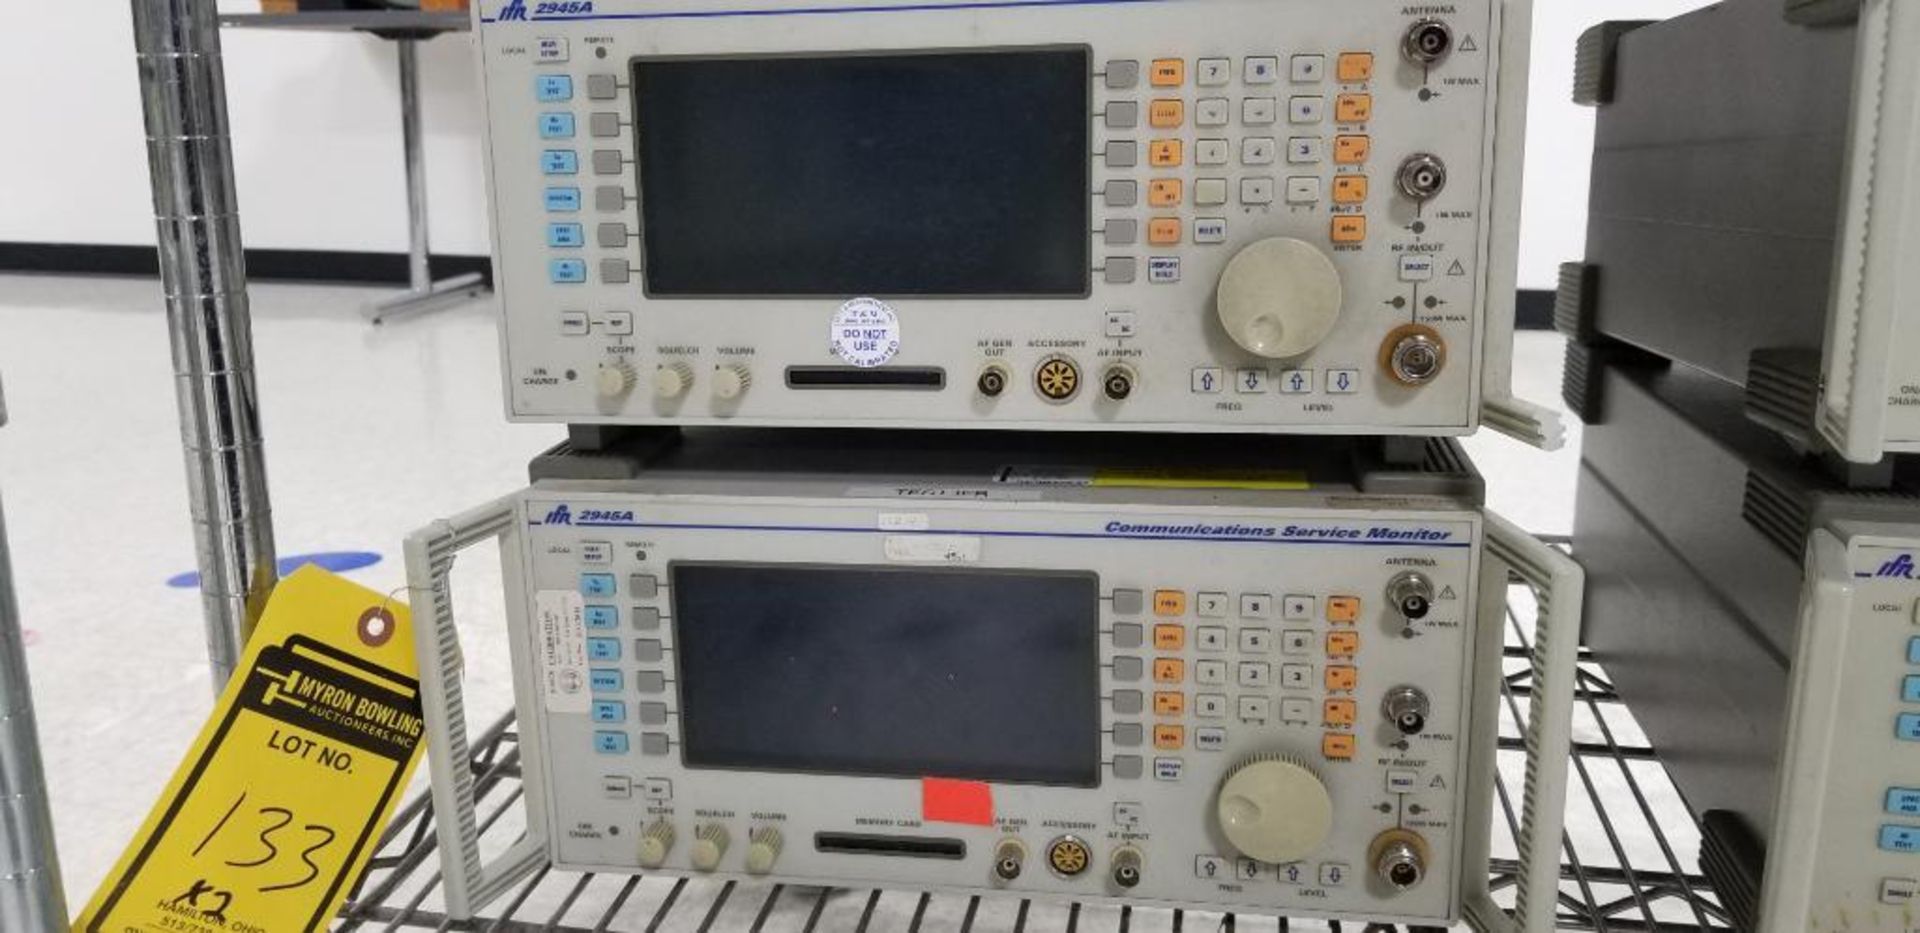 (2x) IFR Communications Service Monitors, Model 2945A